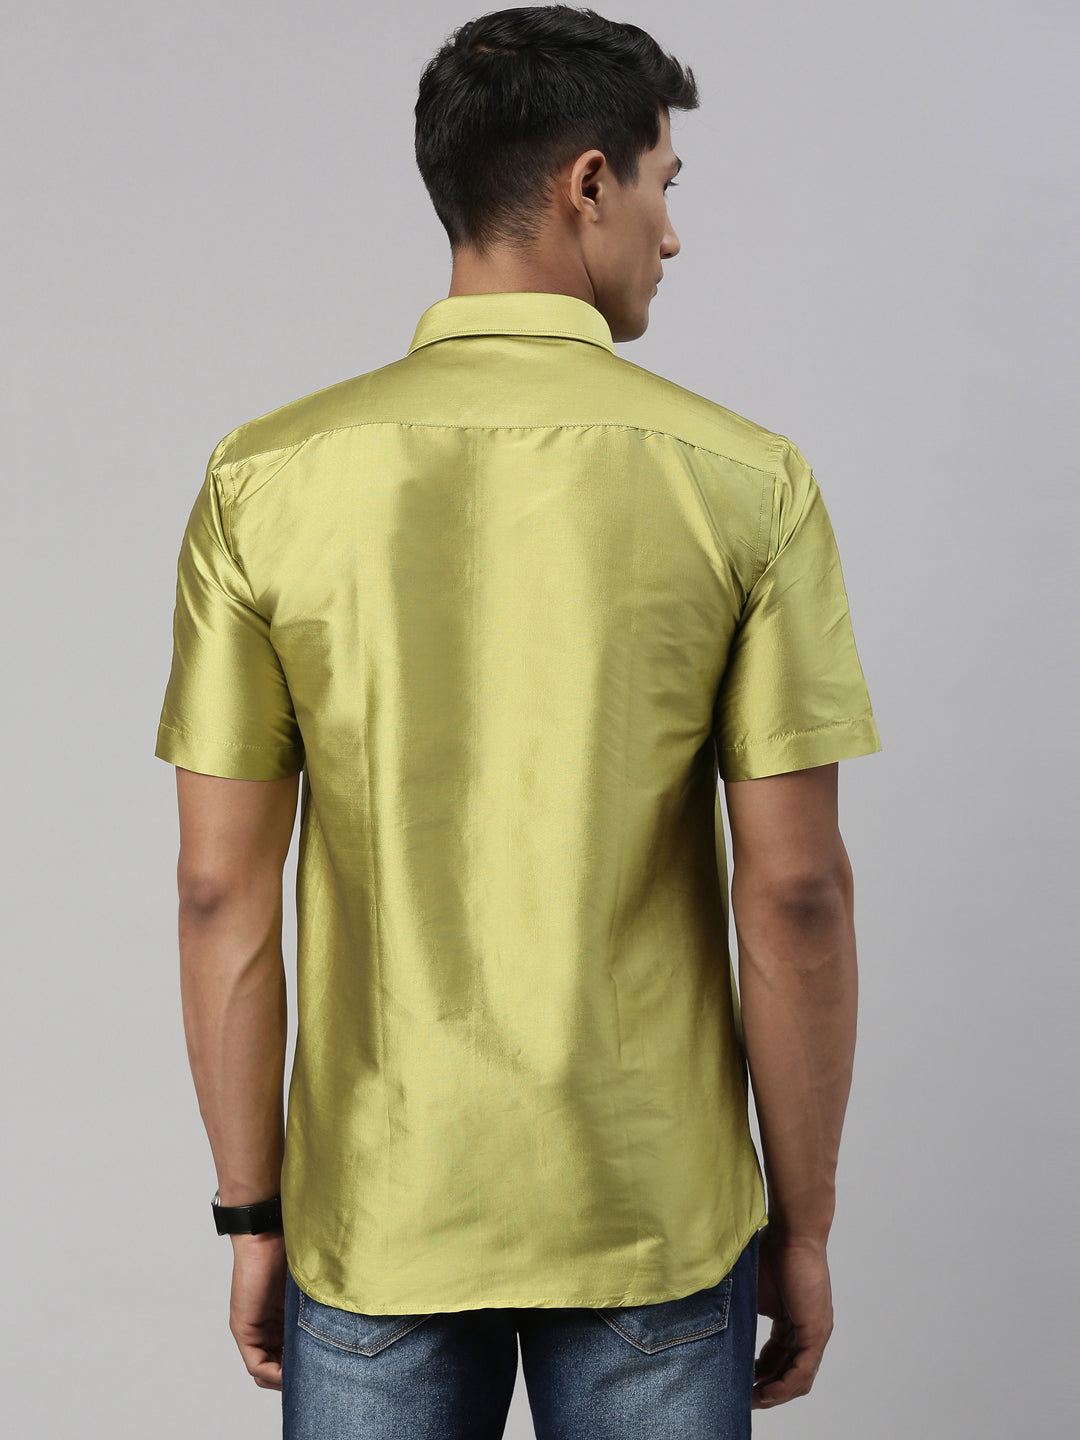 Tattva Green Colour Half sleeve Shirt